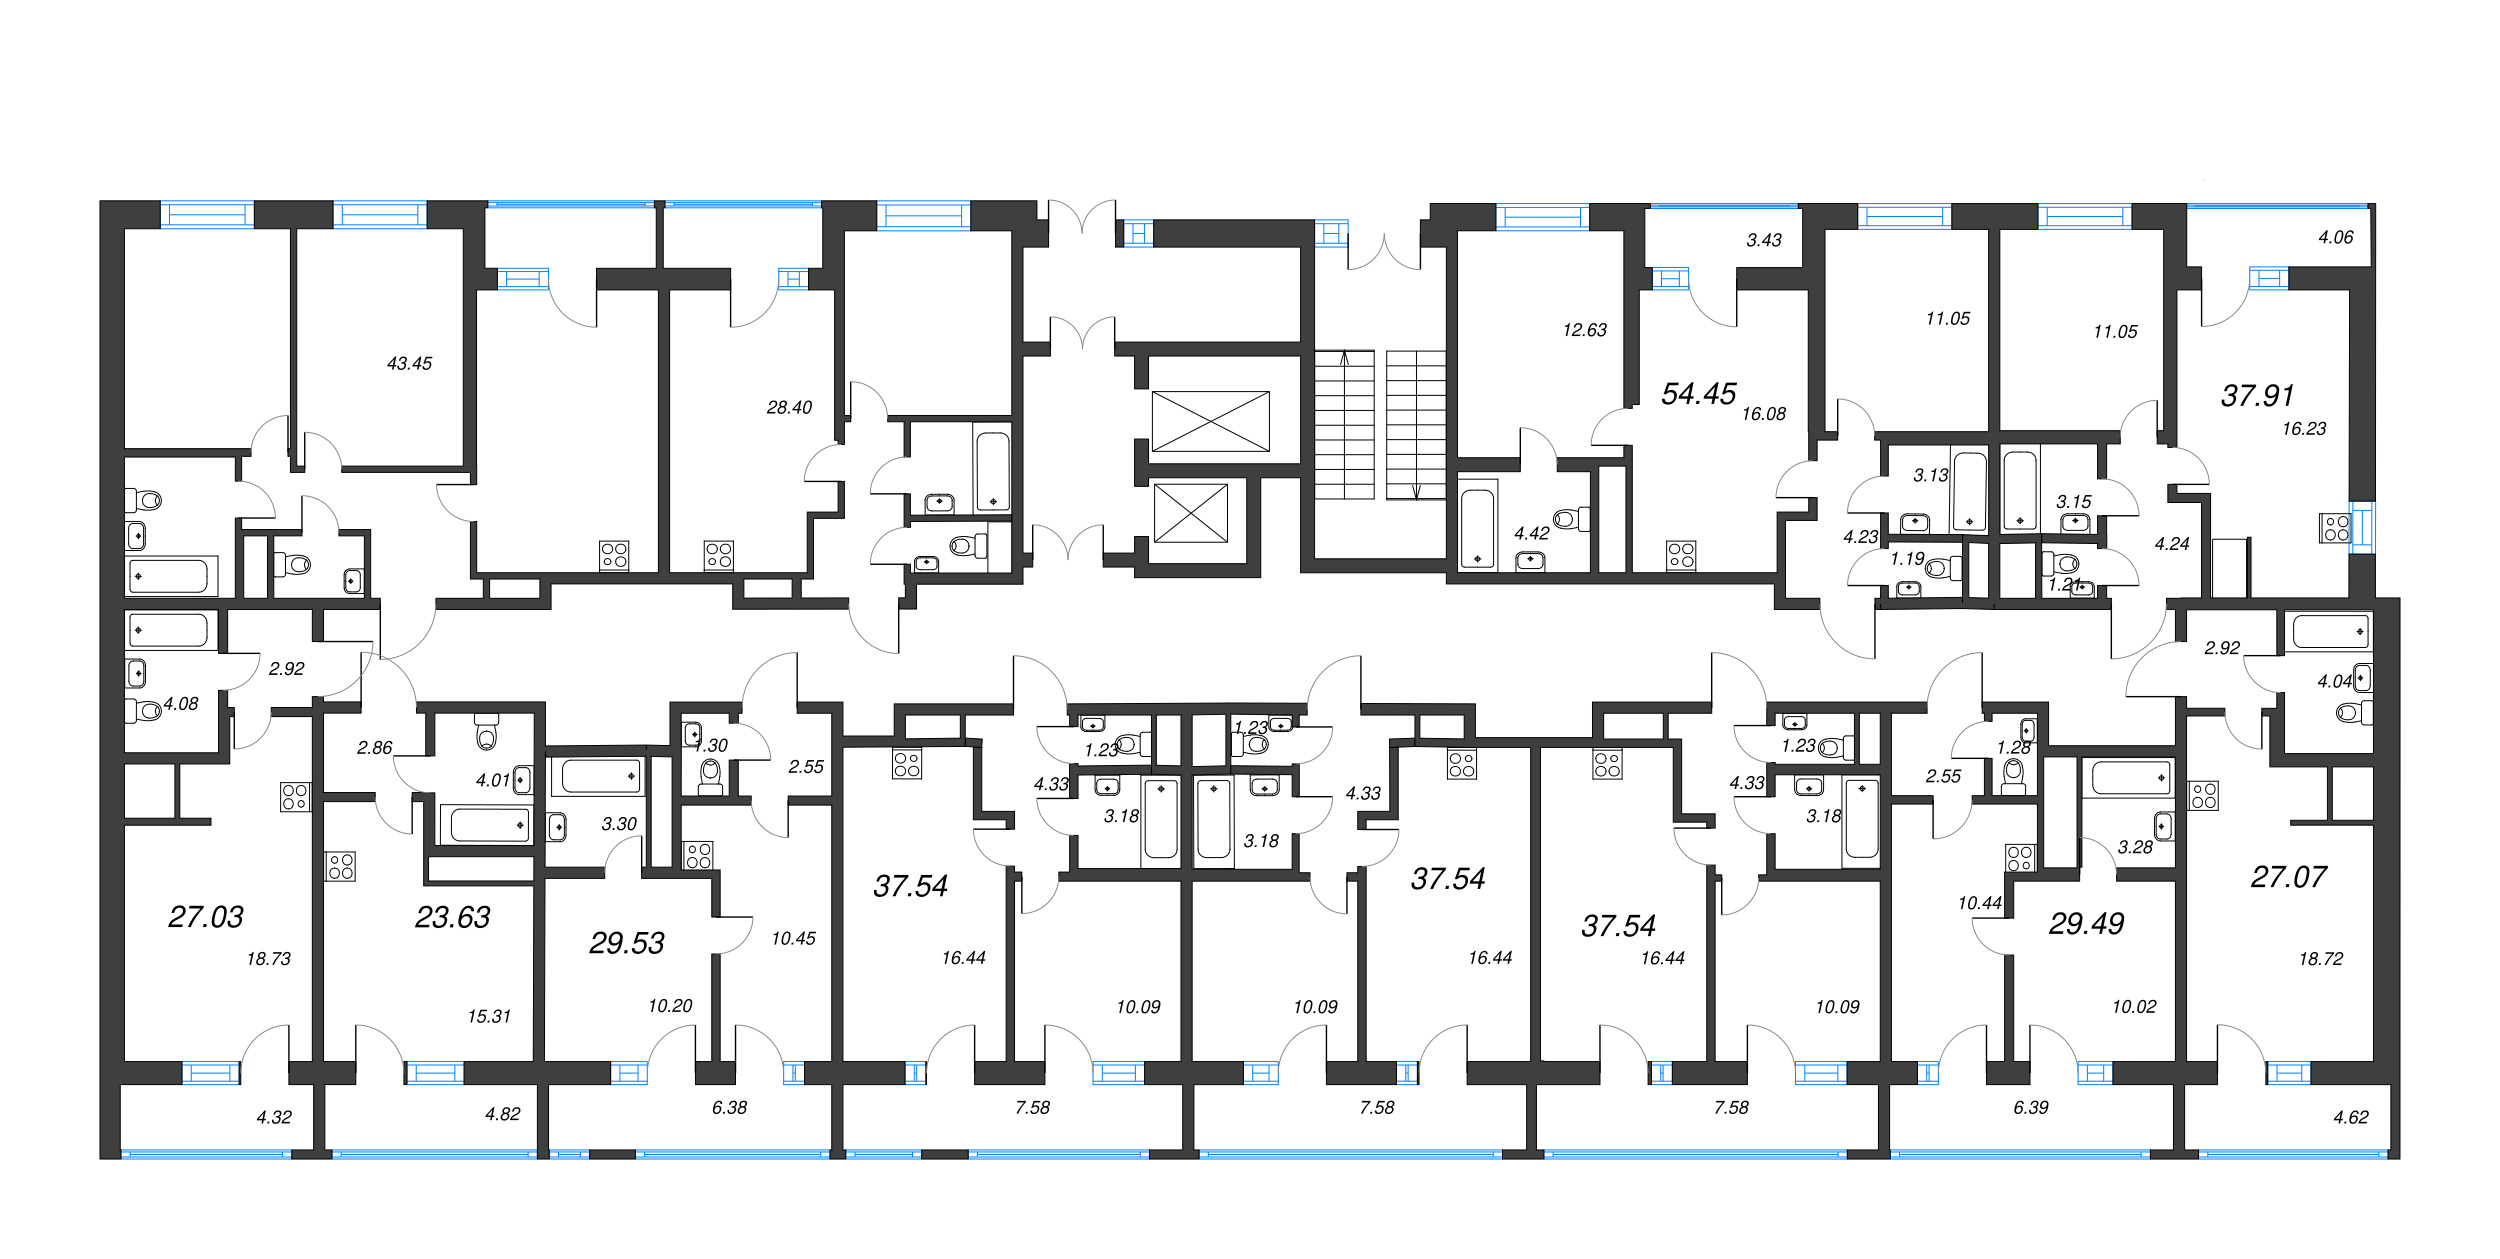 2-комнатная (Евро) квартира, 37.54 м² в ЖК "Искра-Сити" - планировка этажа